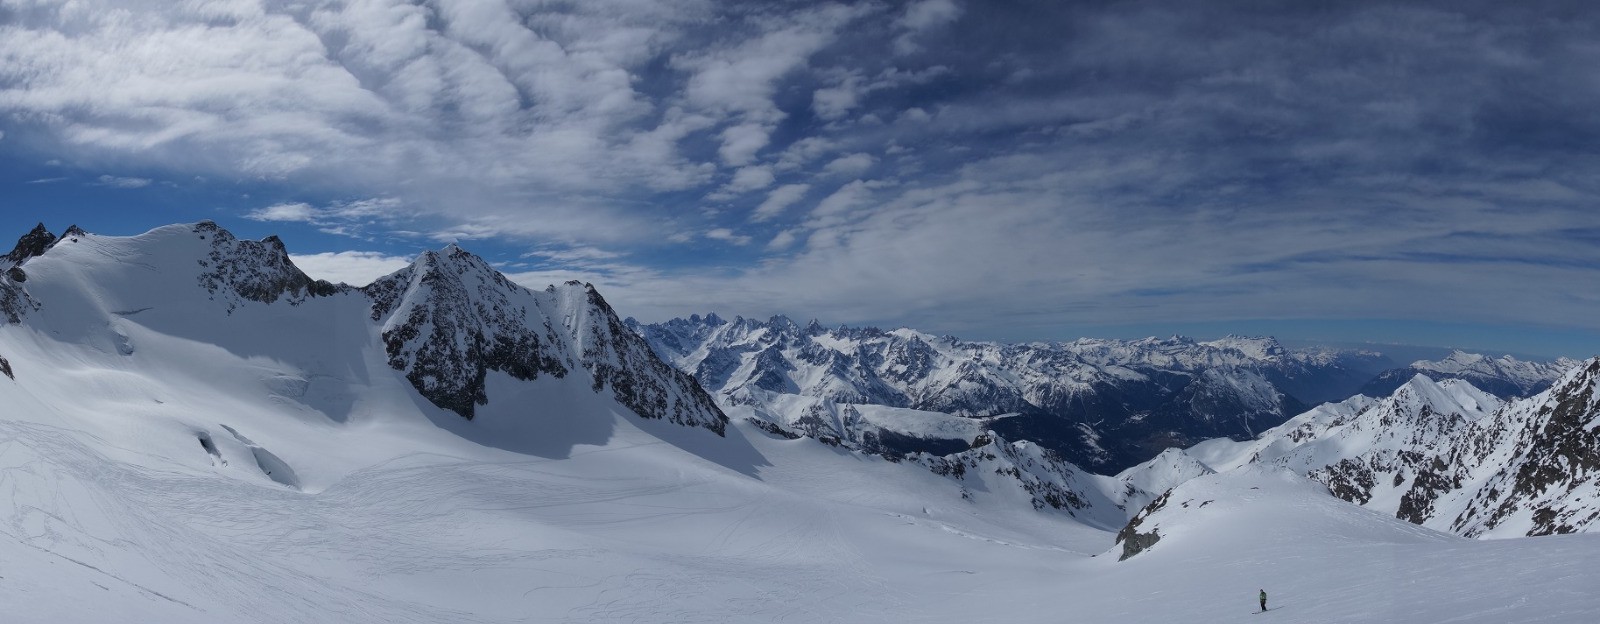 Pano du Ritord au Massif du Mt Blanc